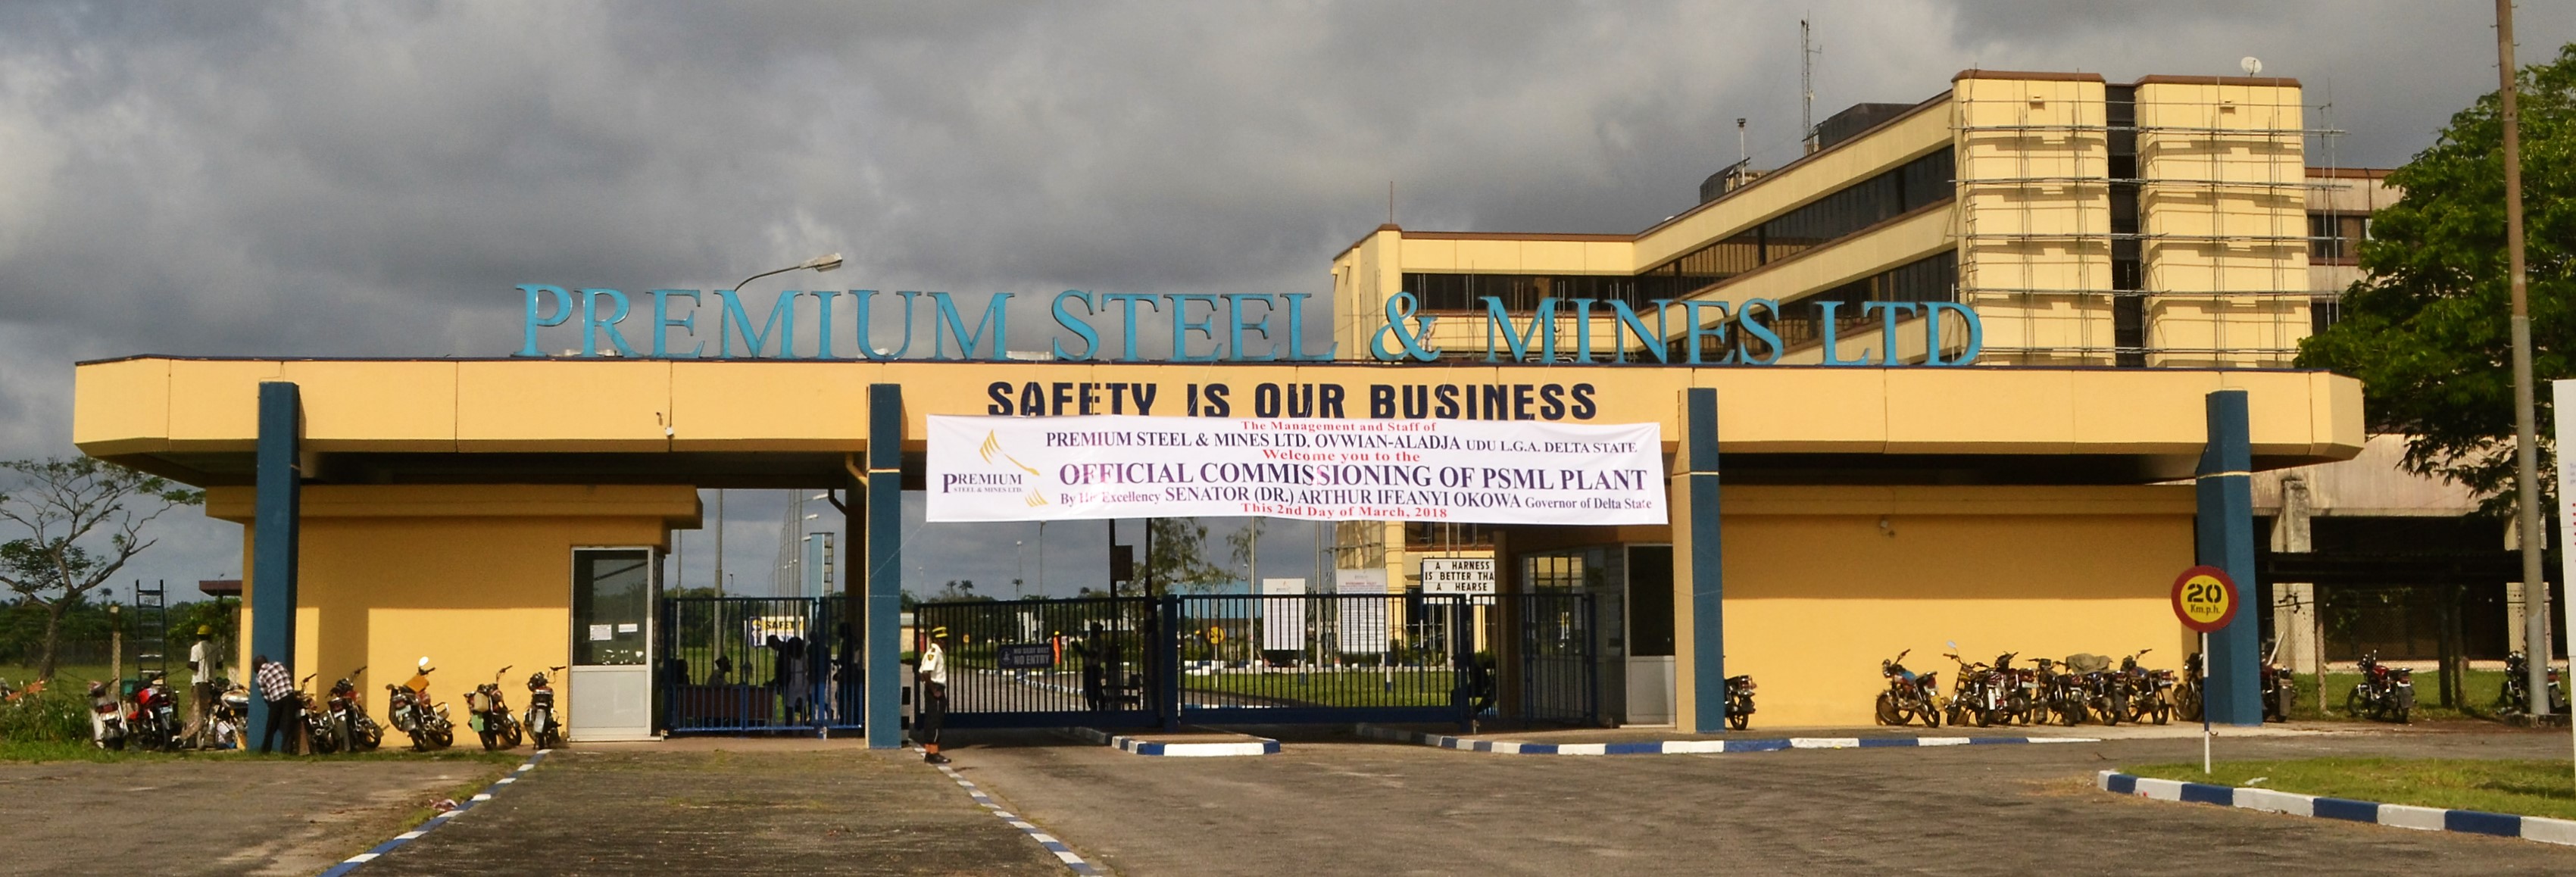 Stop Sale of DSC Assets, Udu Community Warns Premium Steel